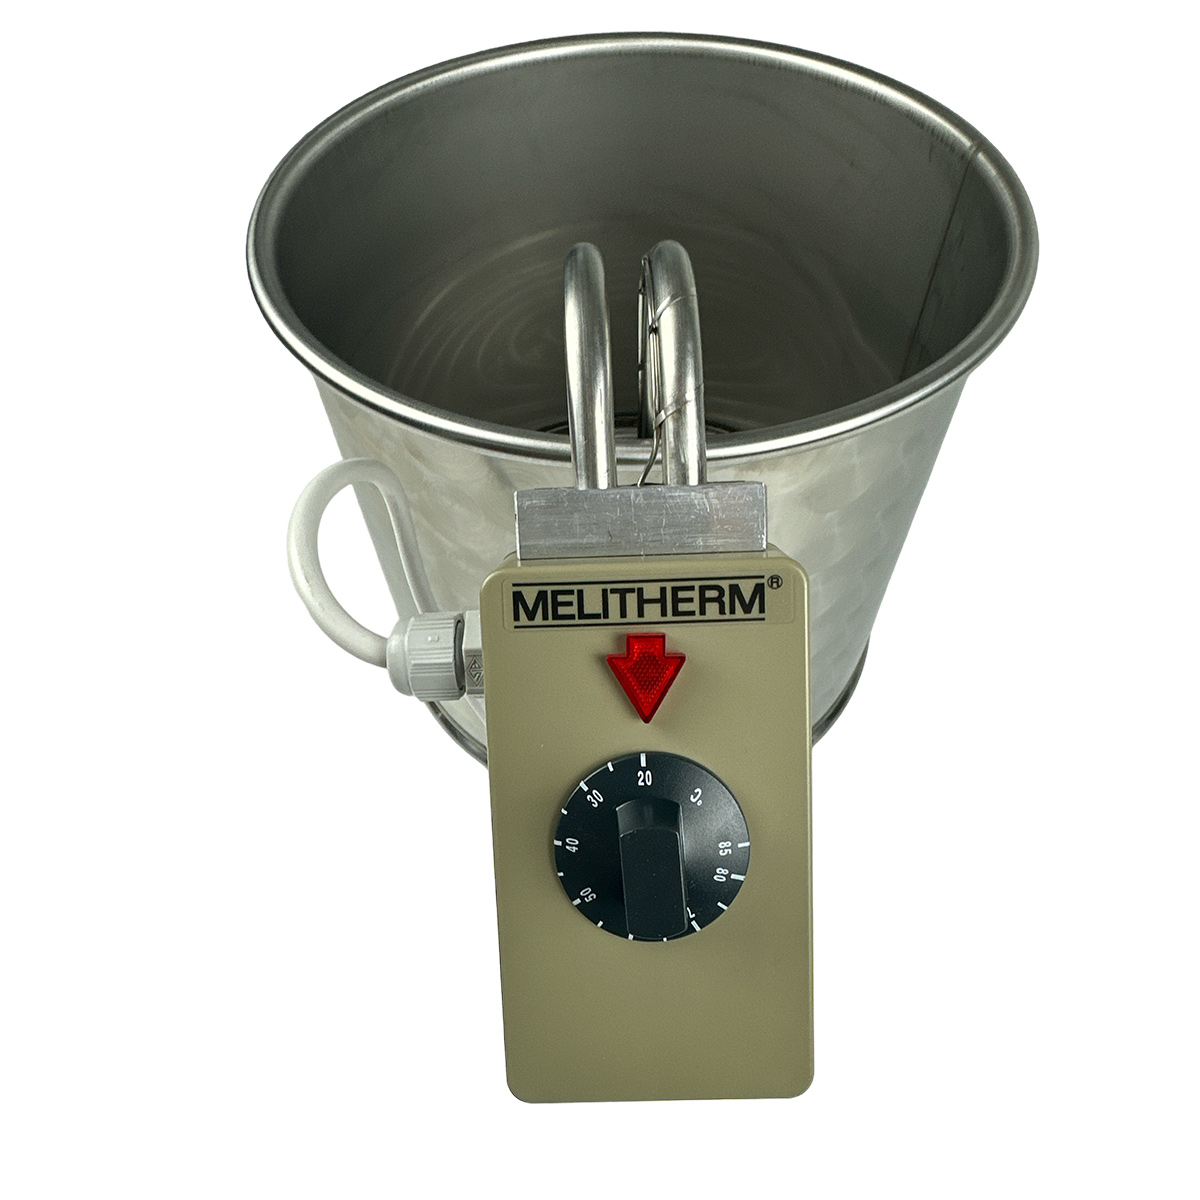 Melitherm Standard AR - Set